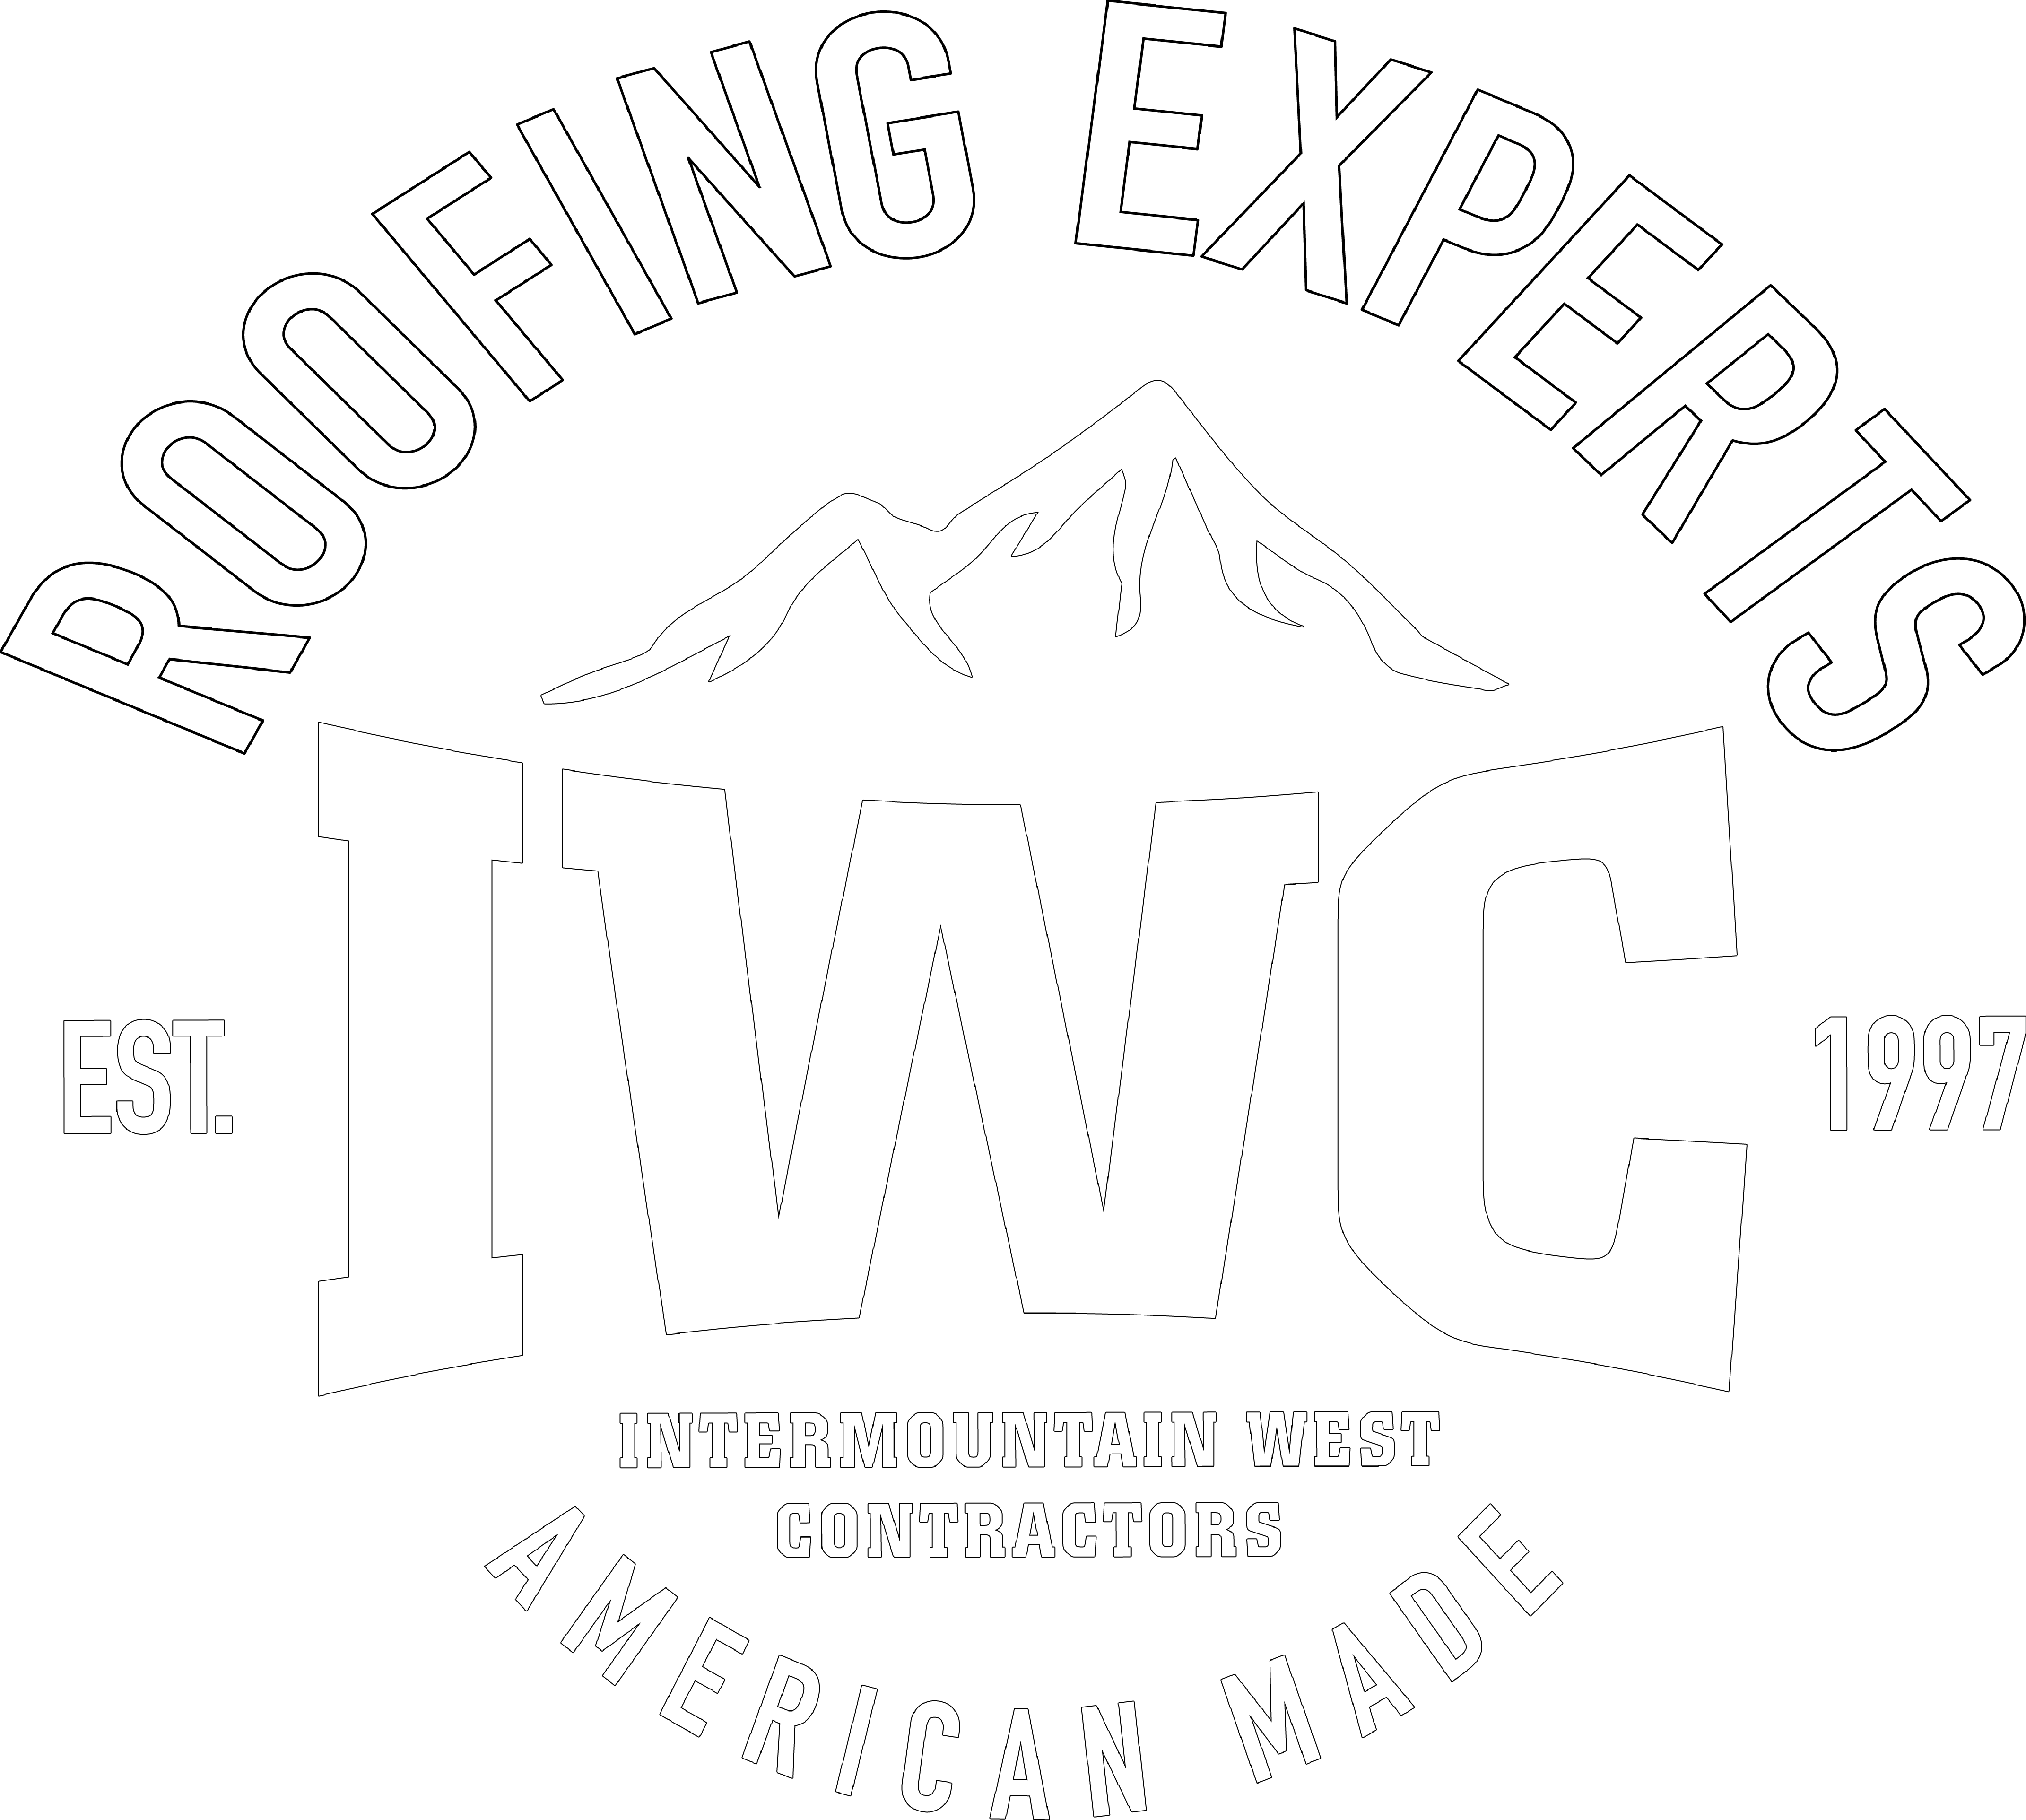 Utah's Roofing Experts